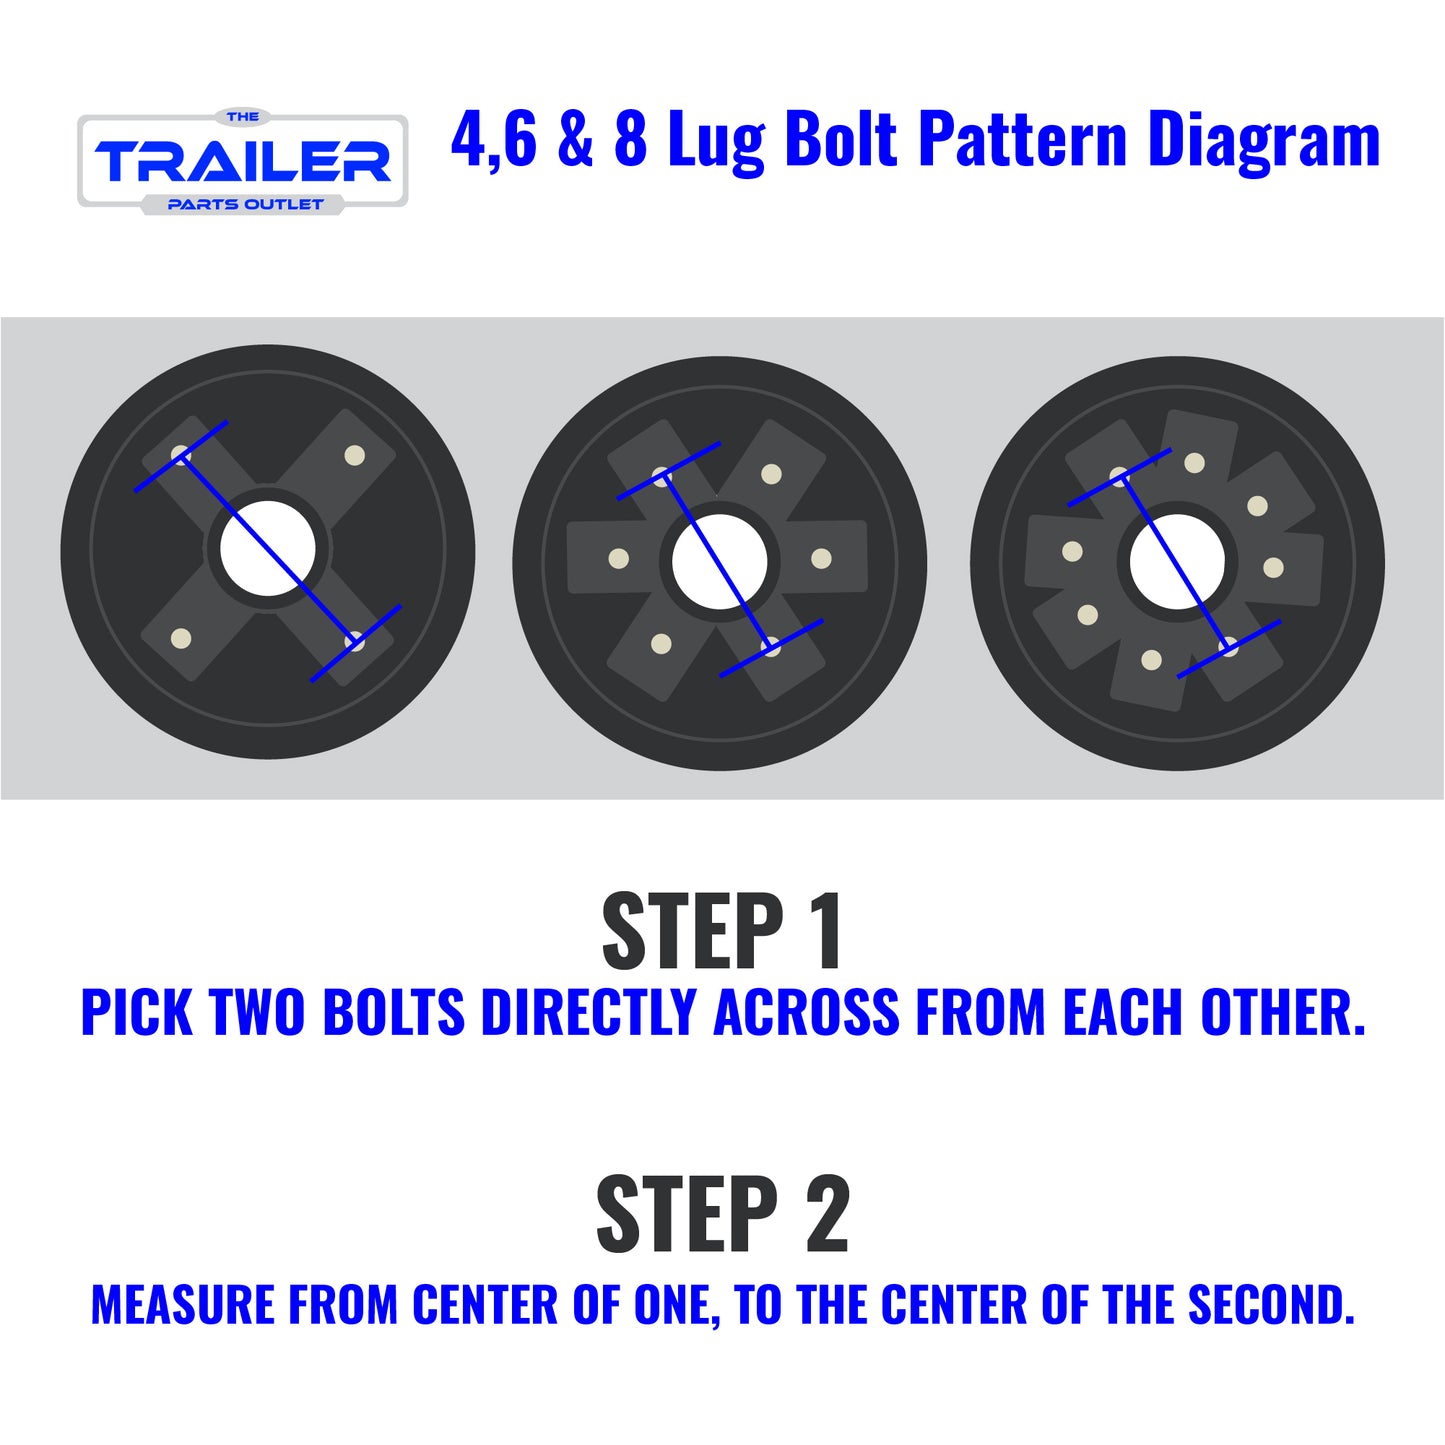 TTPO 4,6 & 8 Lug Bolt Pattern Diagram Steps 1 & 2